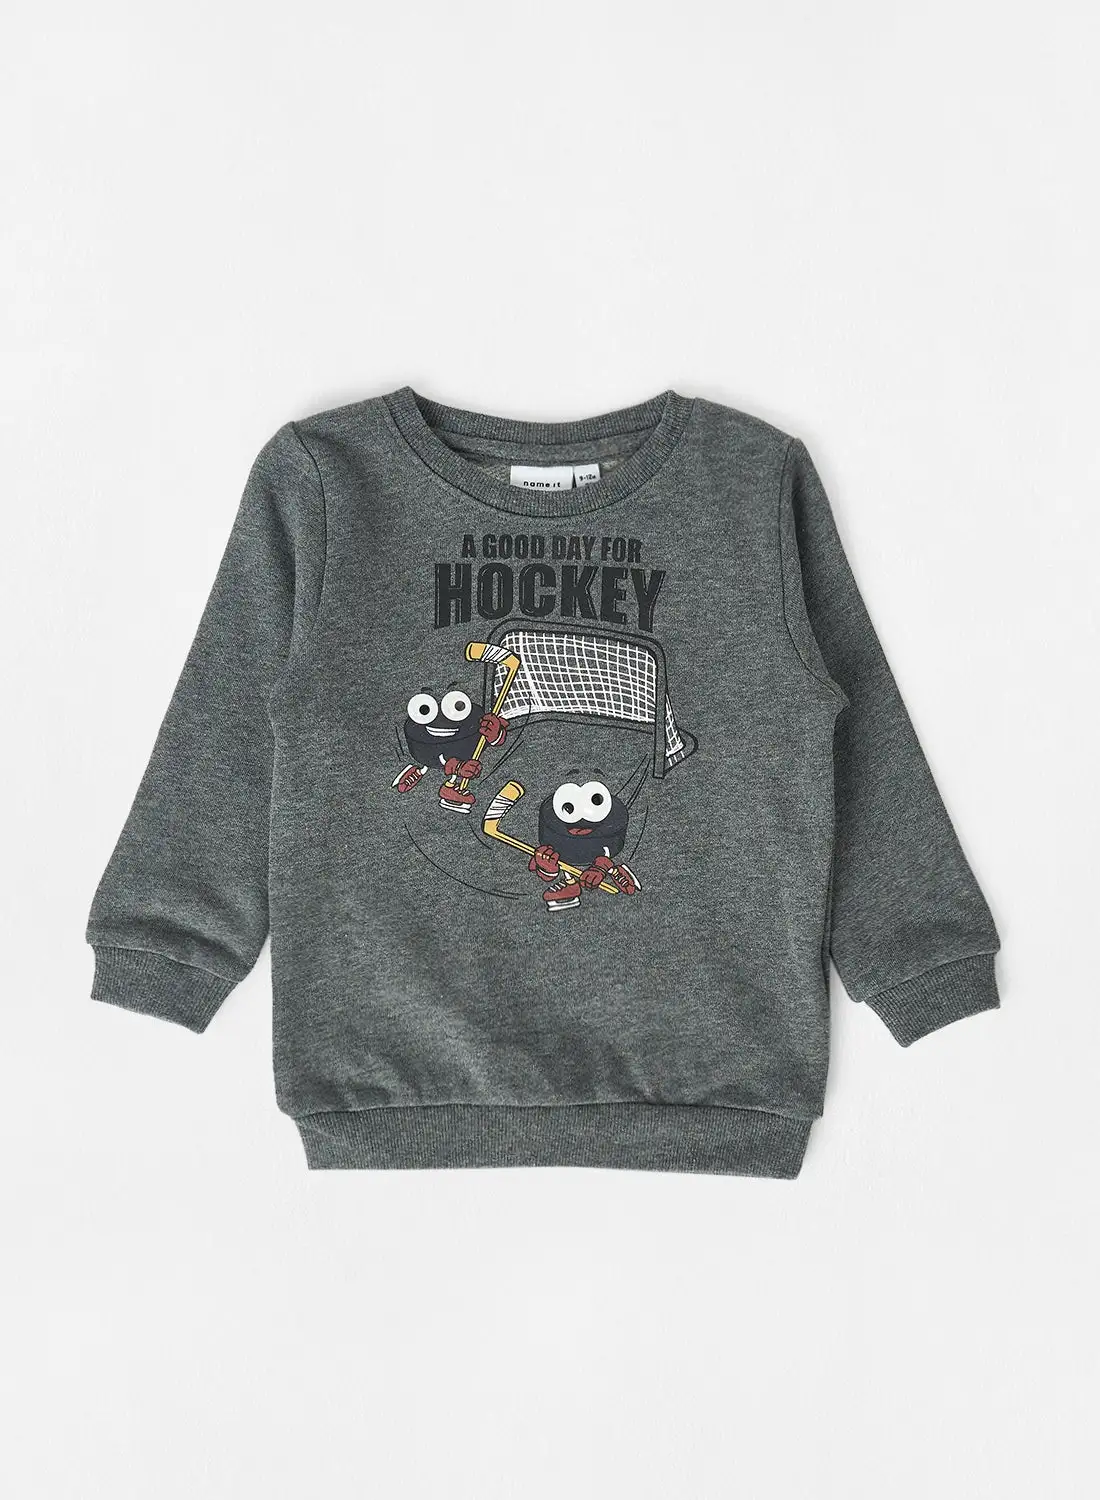 NAME IT Baby/Kids Graphic Sweatshirt Grey